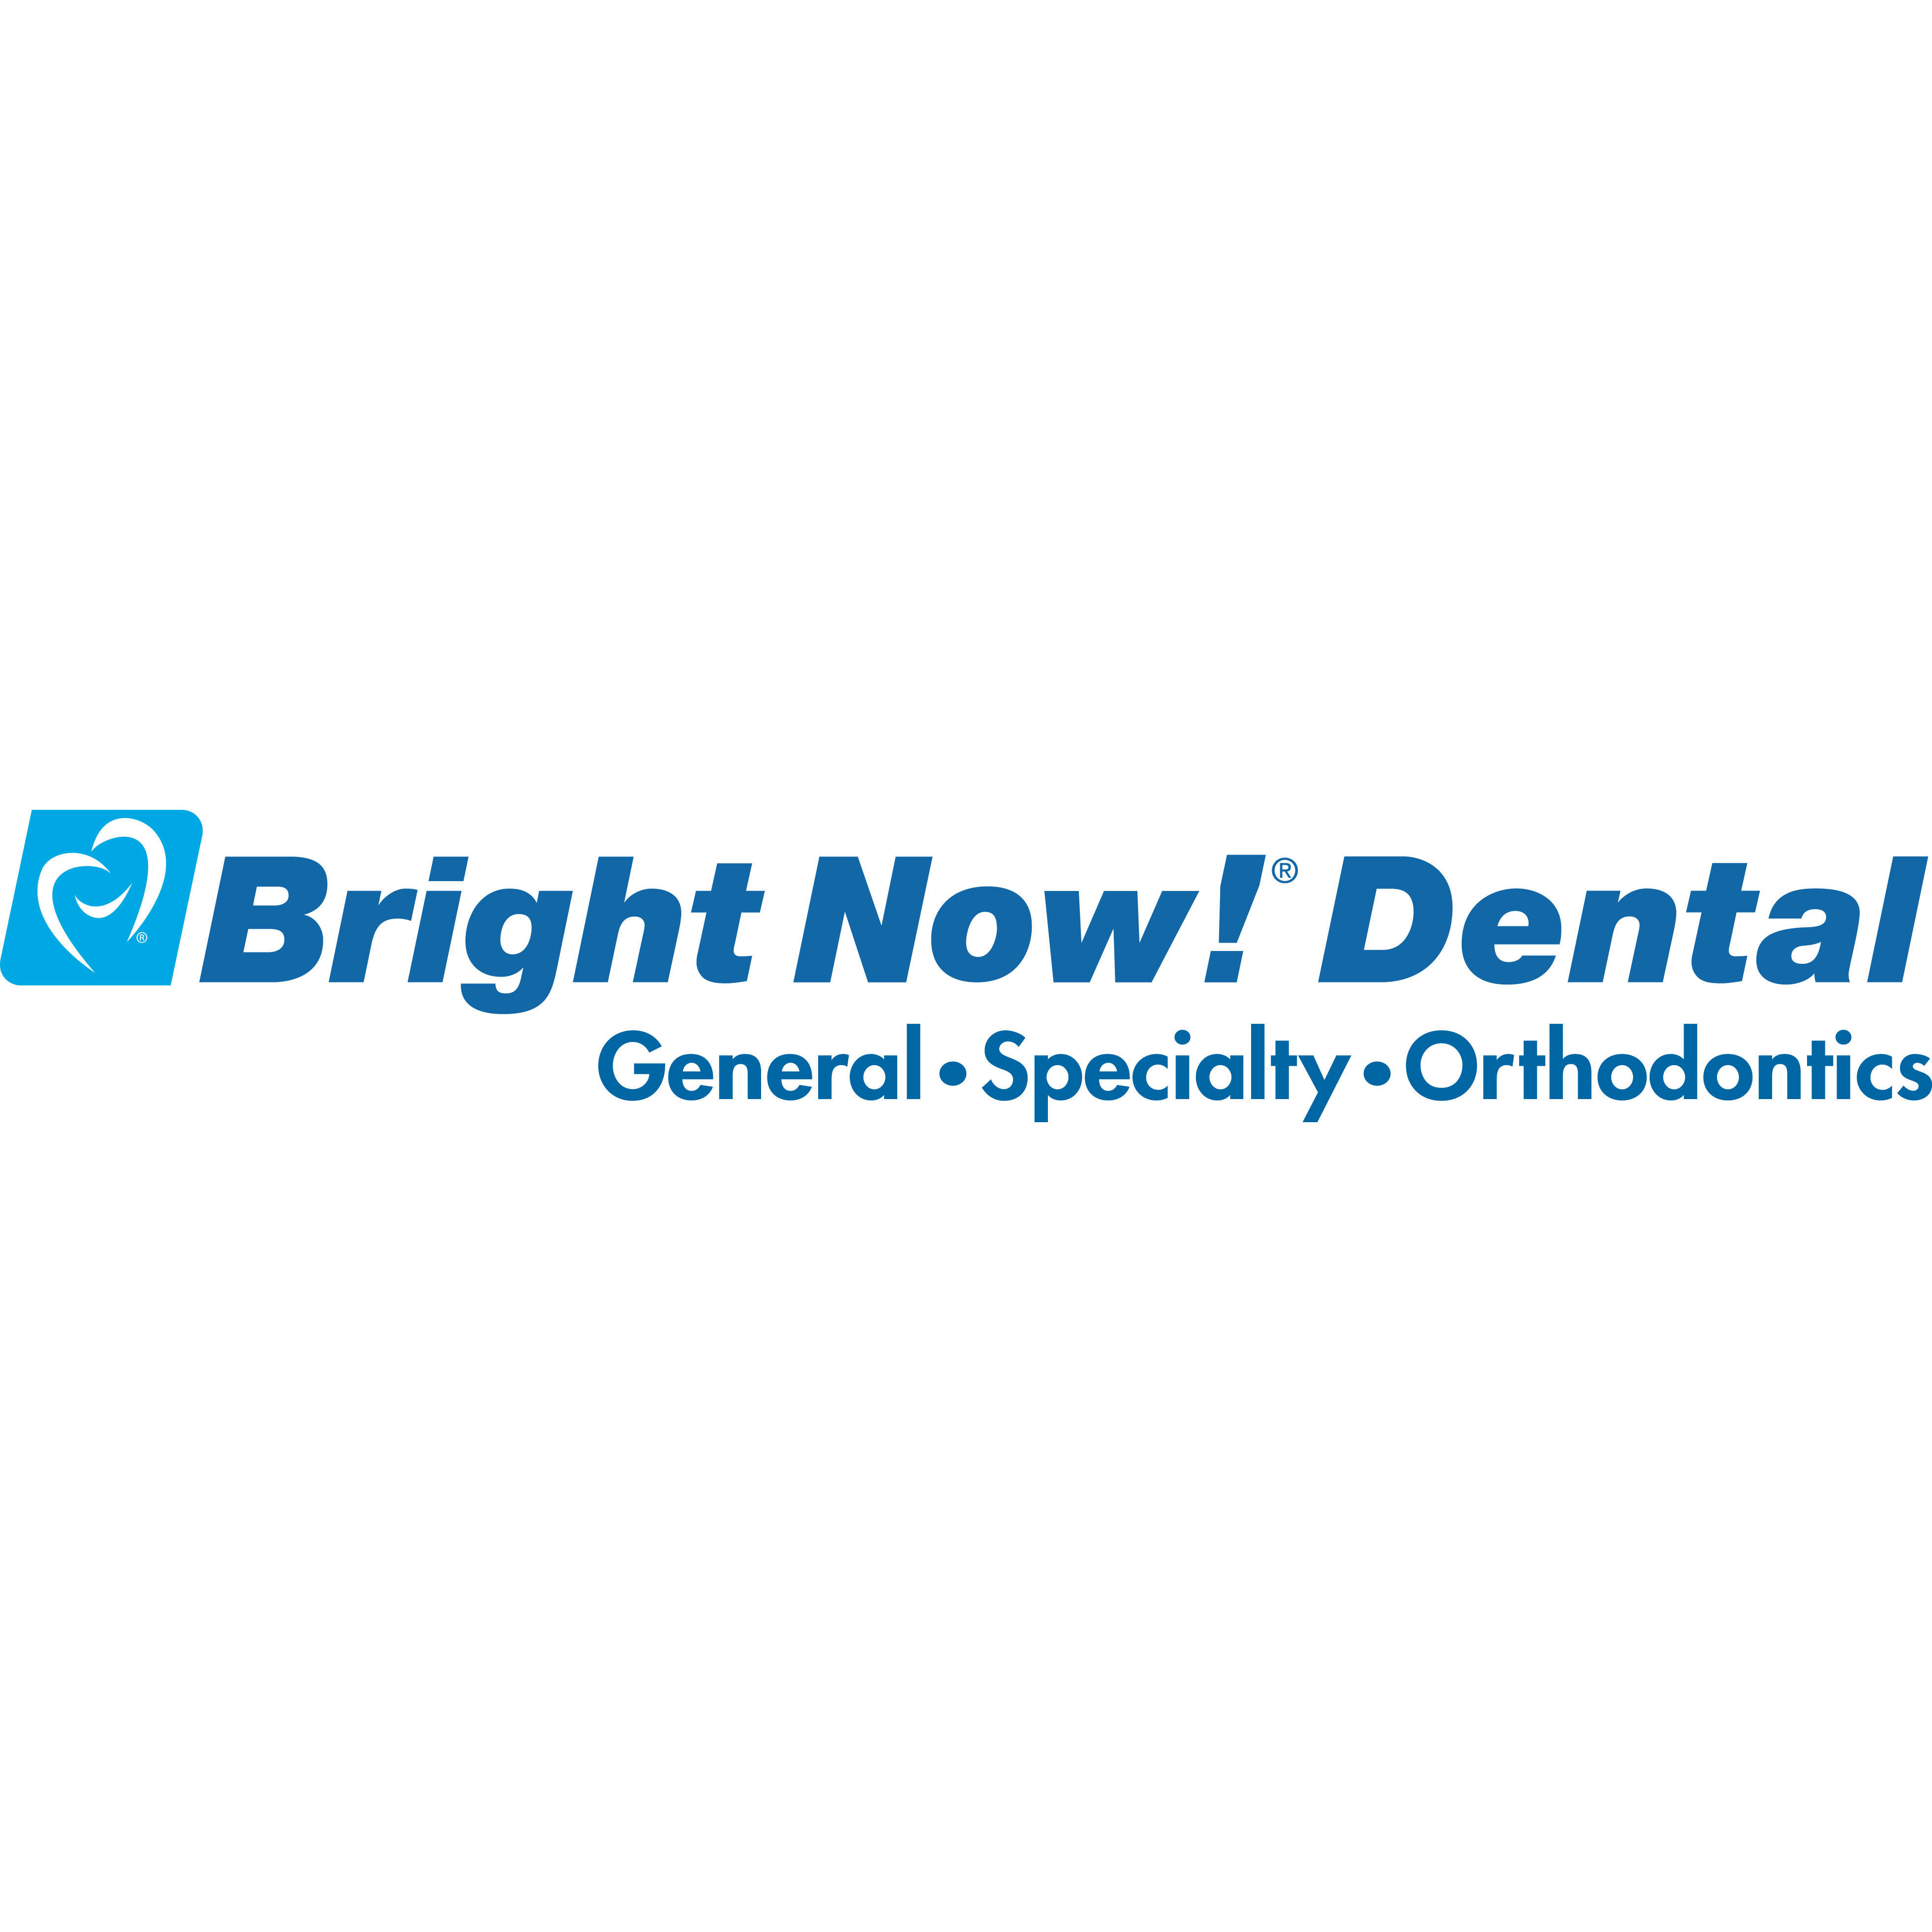 Newport Dental & Orthodontics